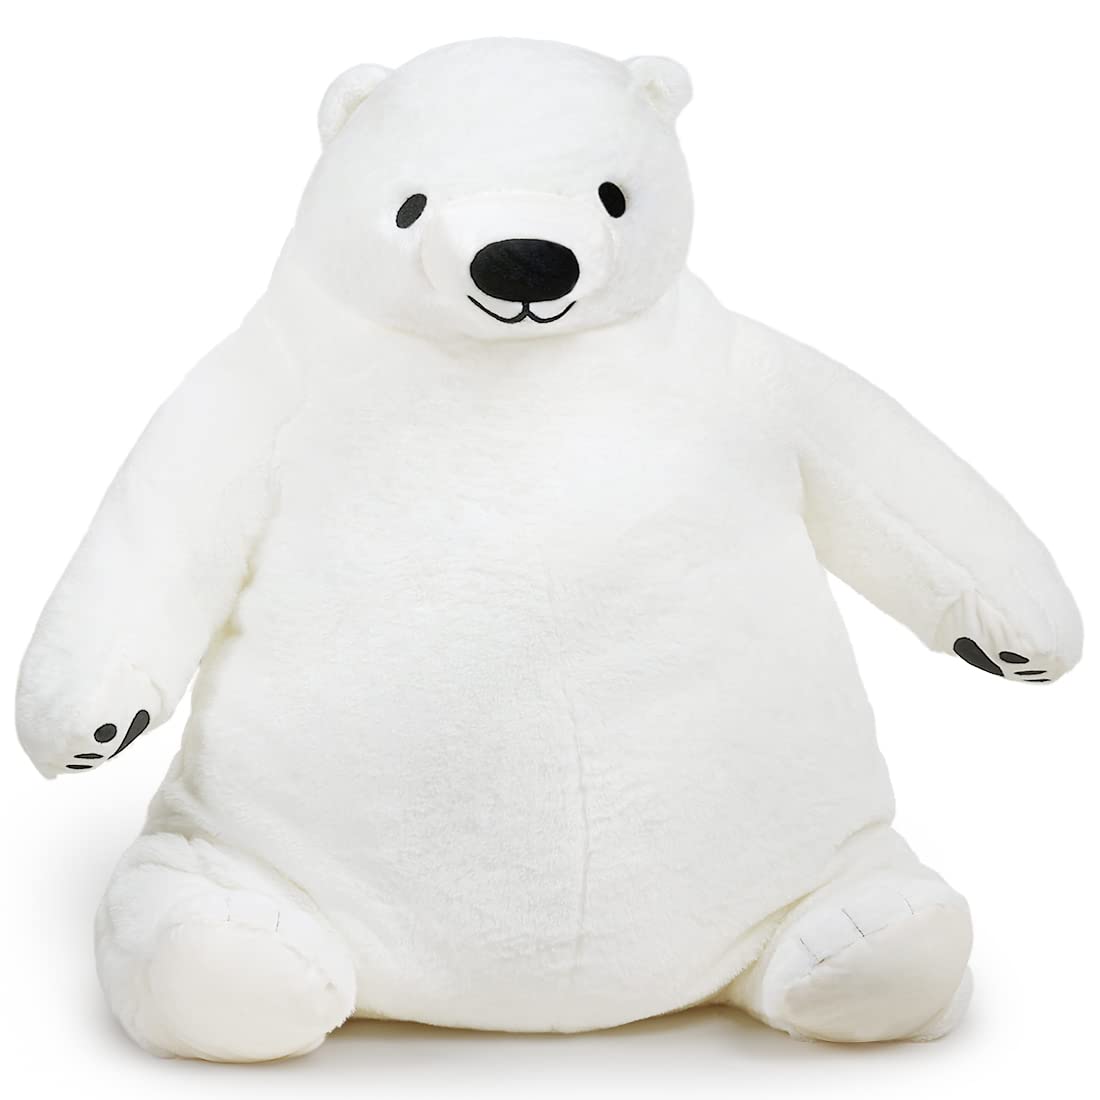 SNOWOLF Djungelskog Bear Plush Toy - Giant Simulation Stuffed